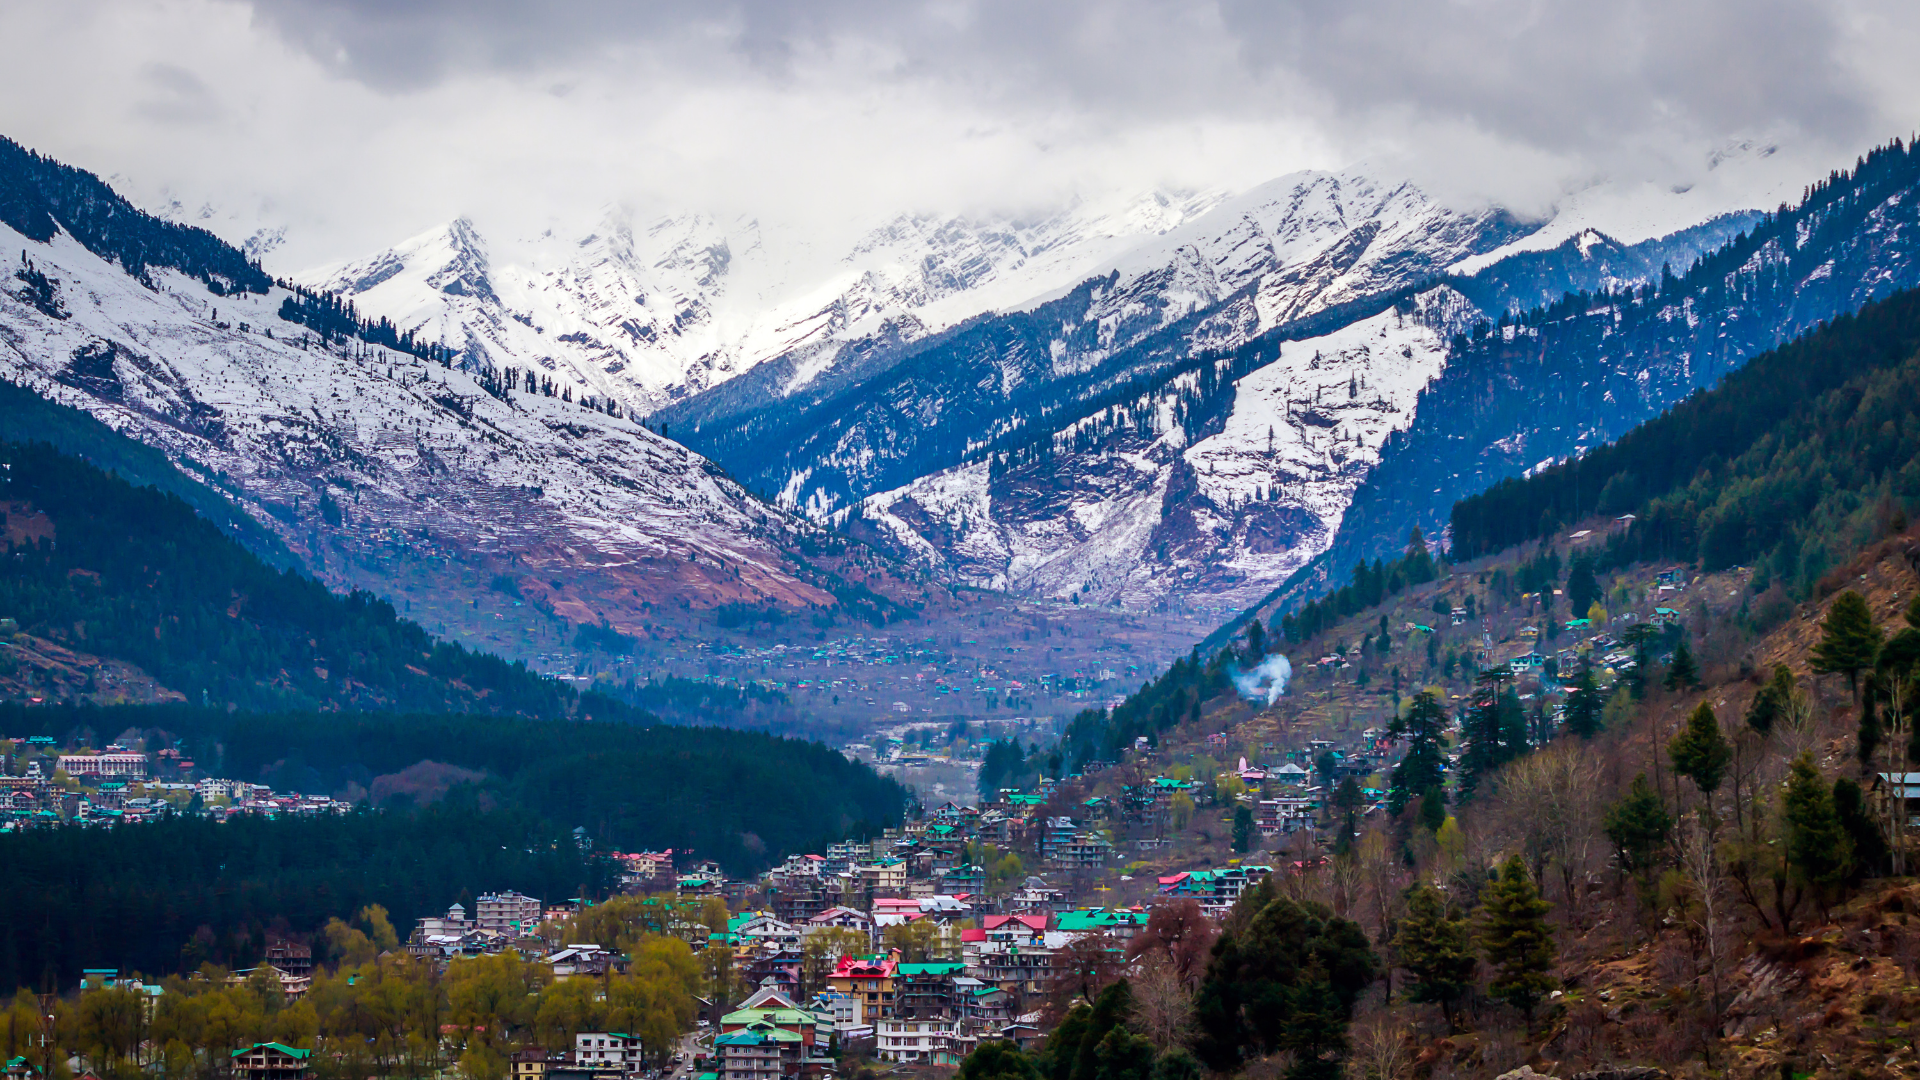  Manali, Himachal Pradesh